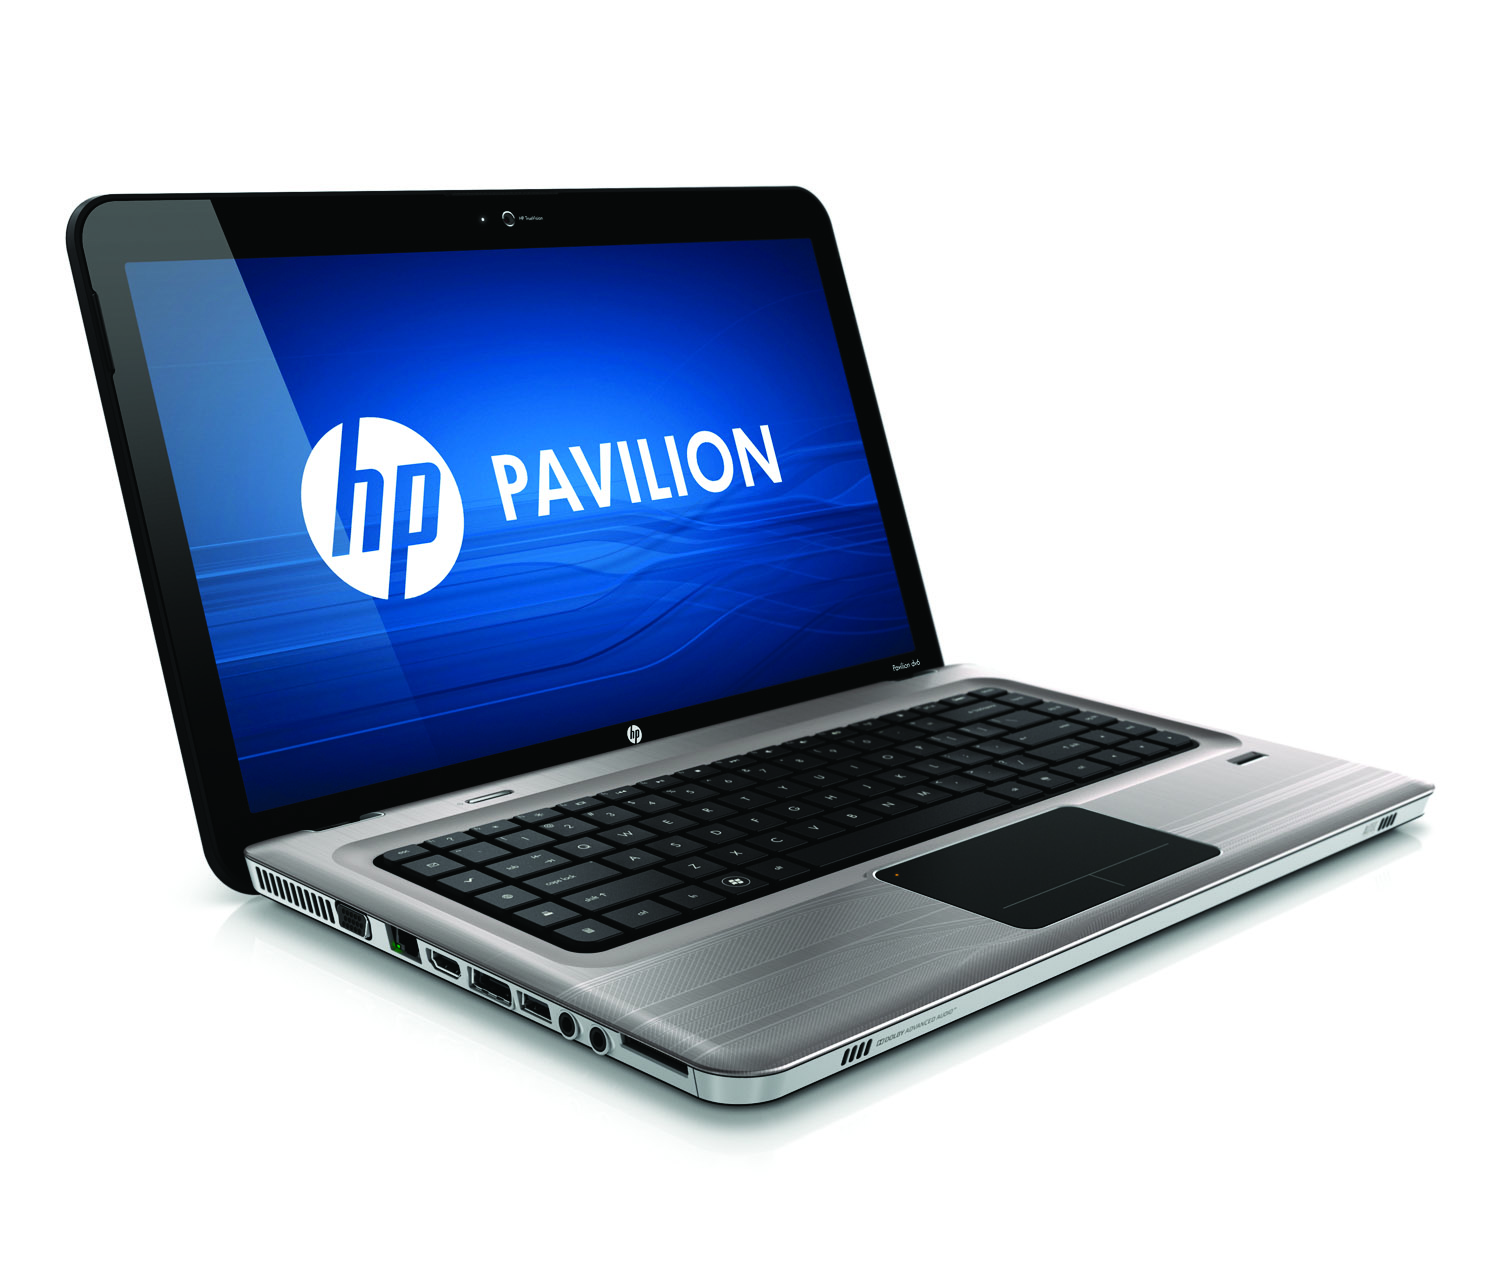 HP Pavilion dv6059ea Notebook PC Dual Core 2gb ram 160GB HD large image 0